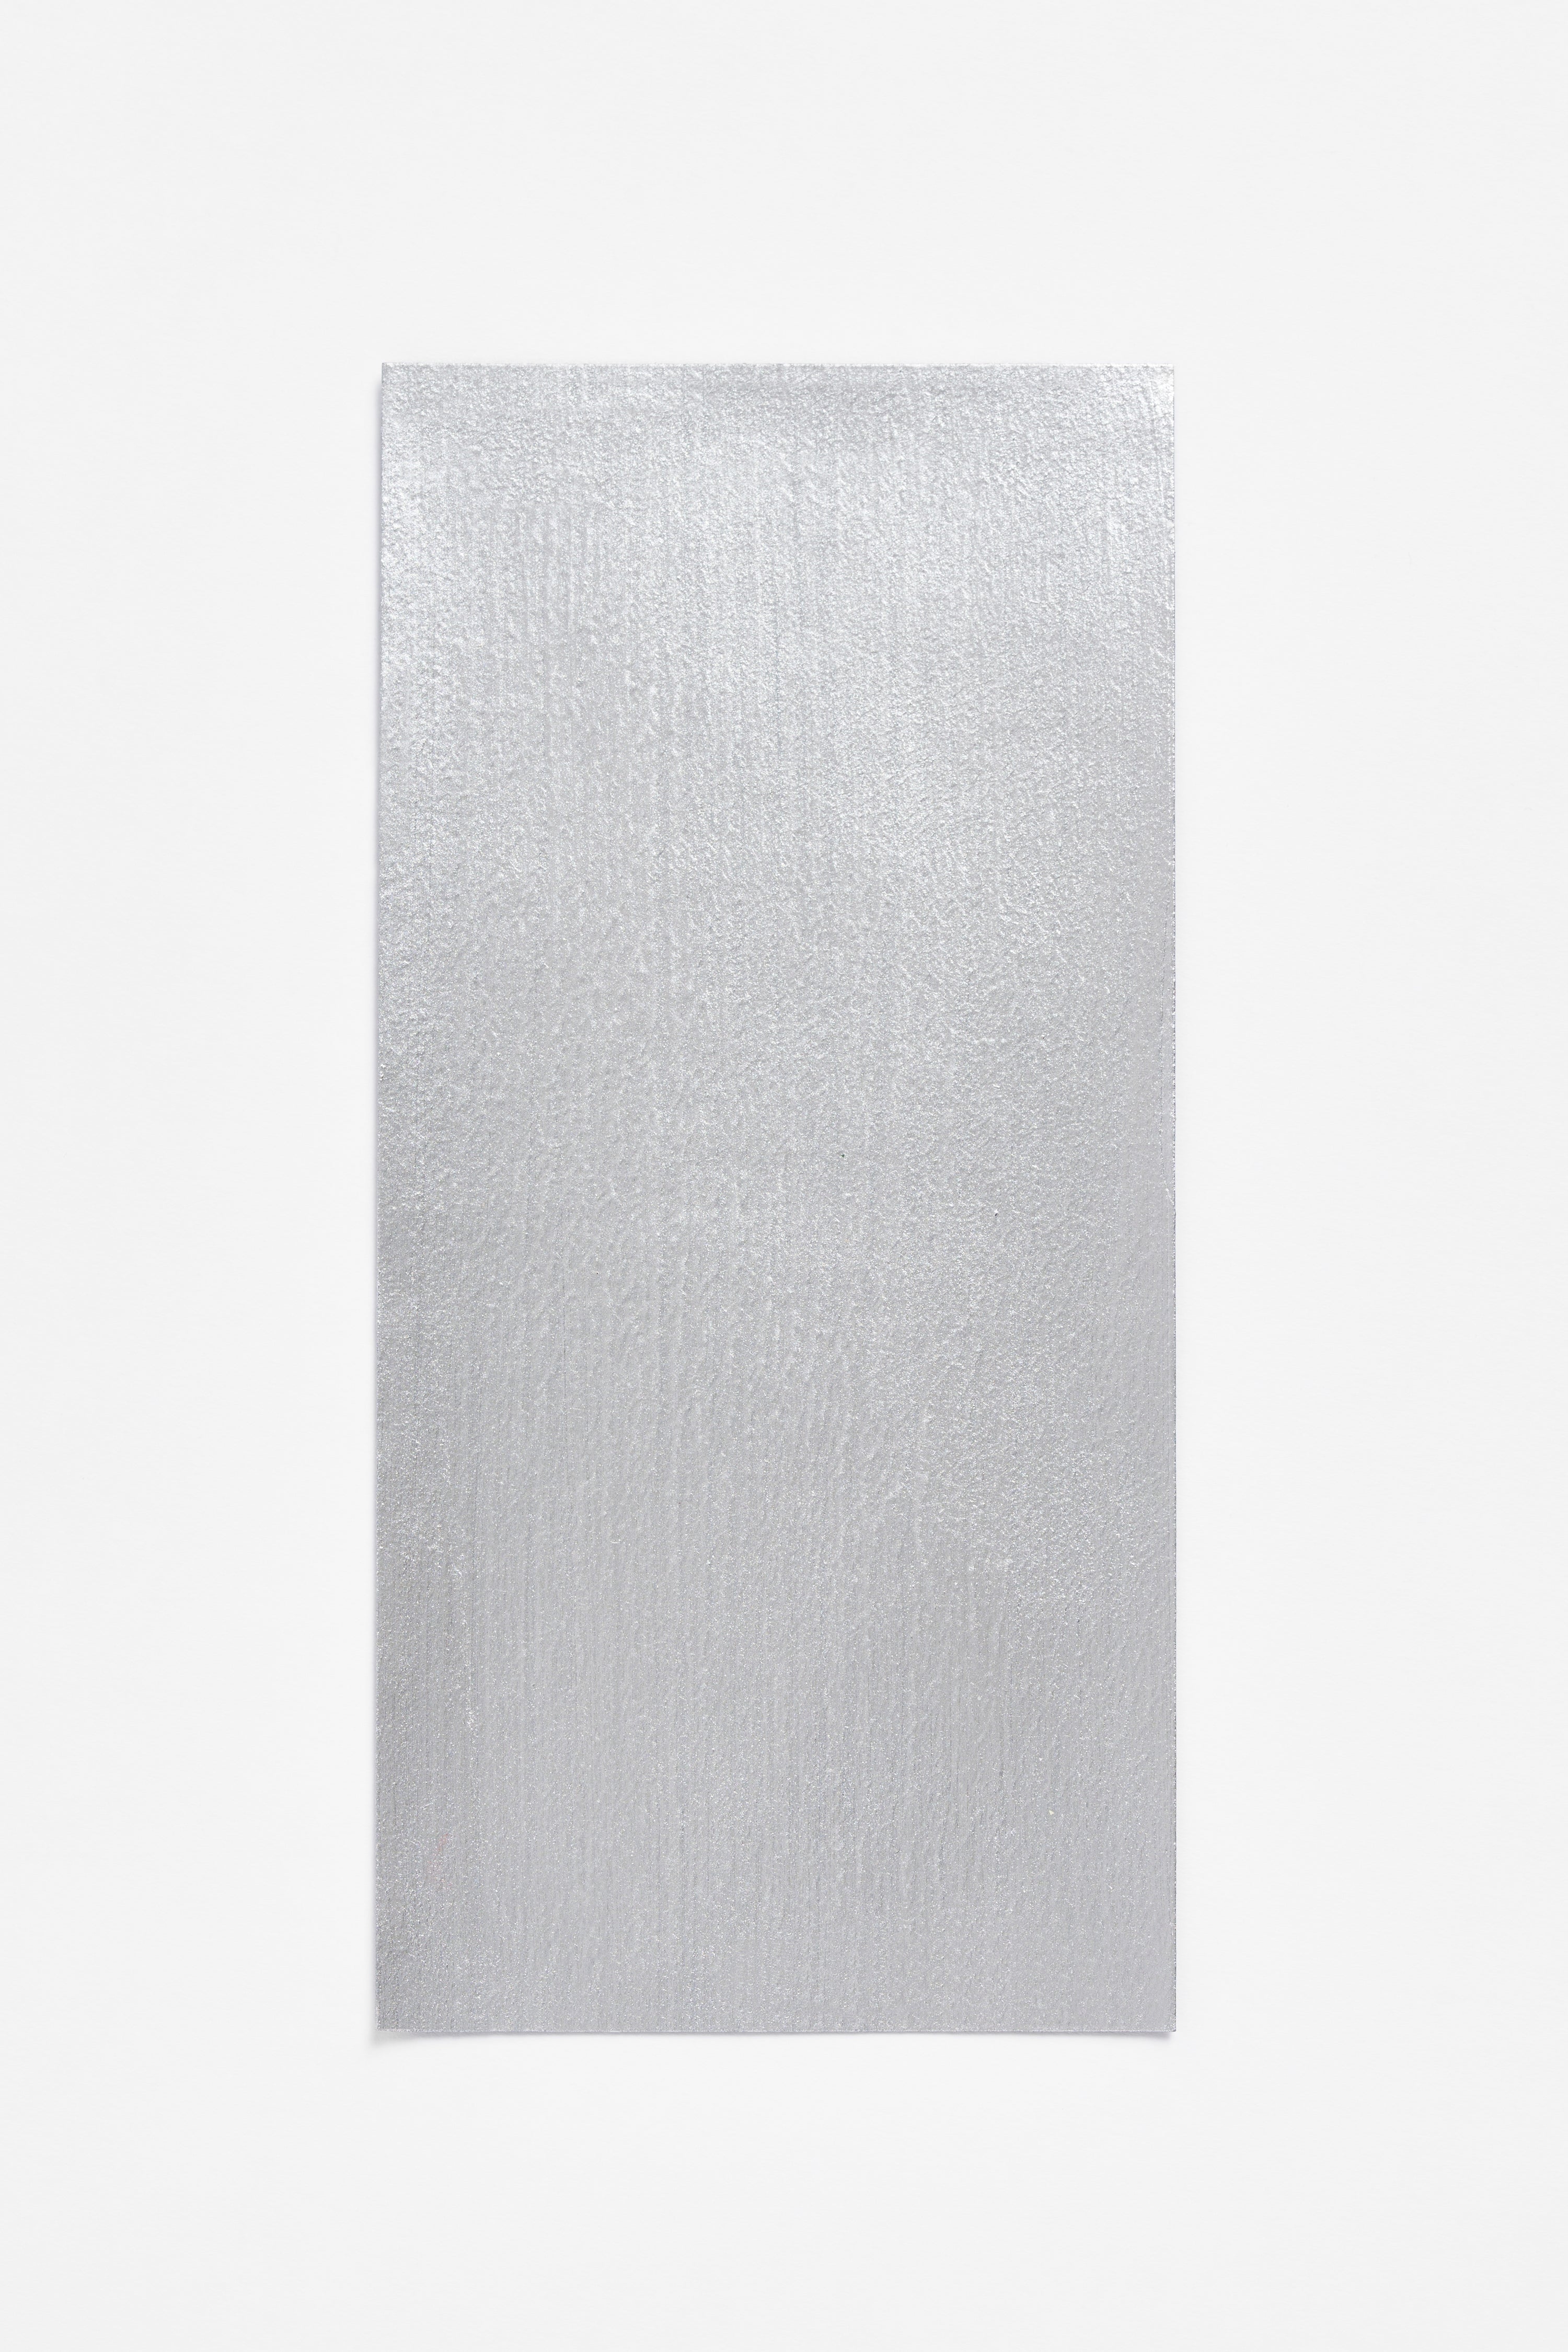 Jeorge Silver — a paint colour developed by Cecilie Bahnsen for Blēo